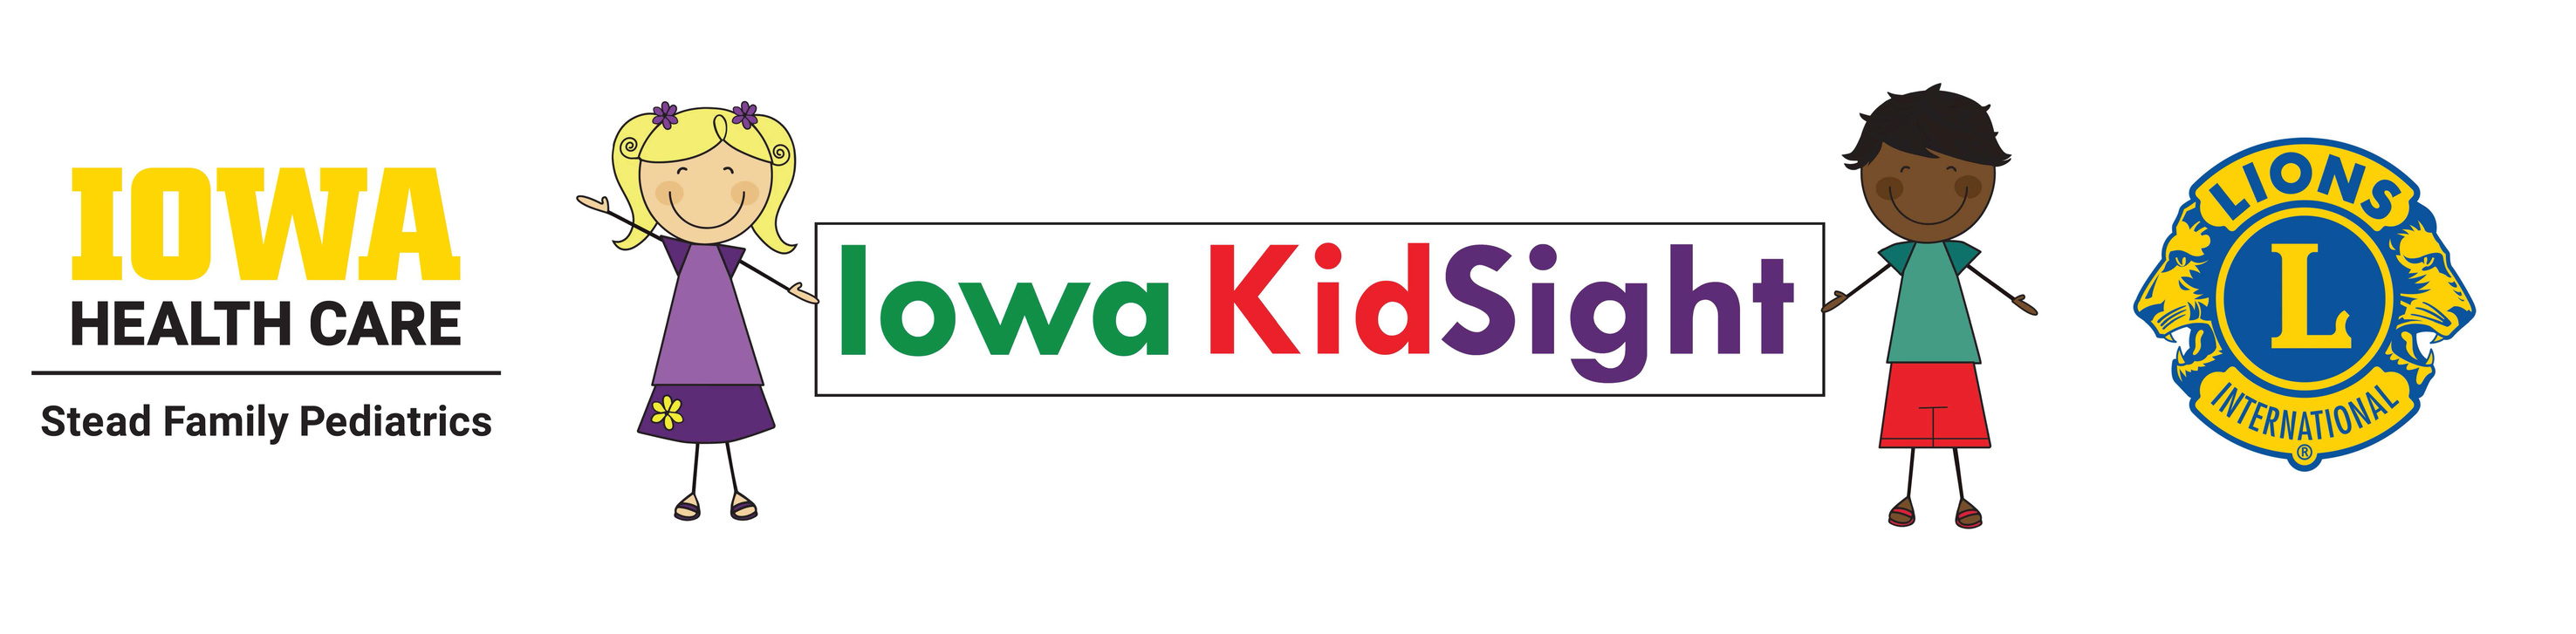 Iowa KidSight Logo